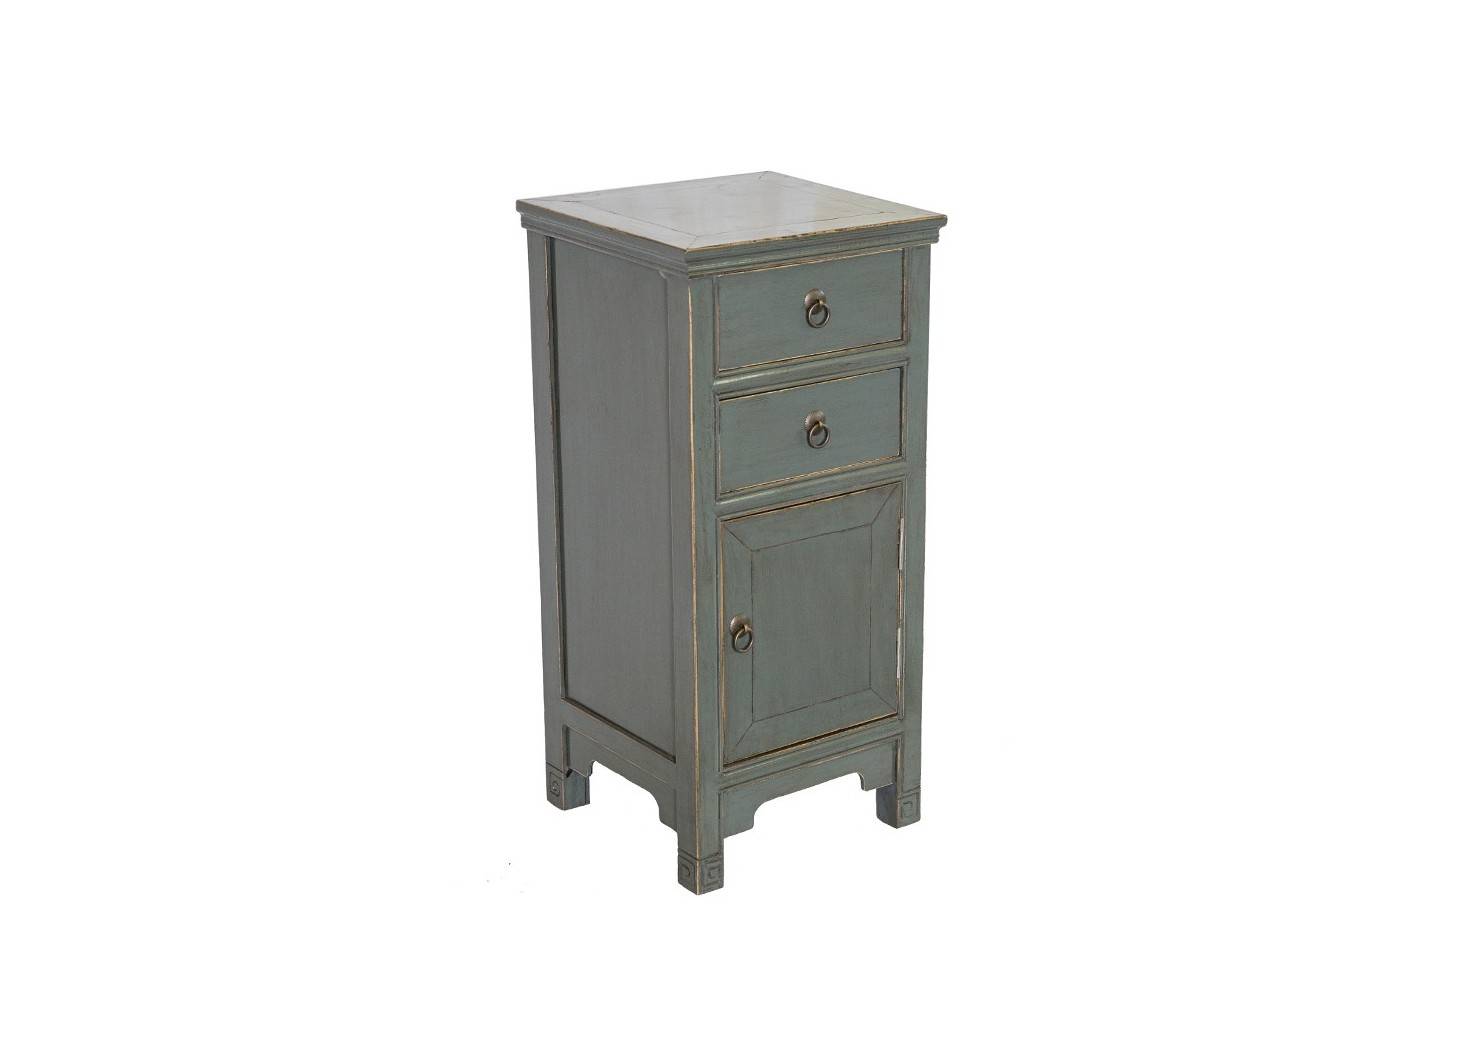 Chinese sideboard - 1 door 2 drawers - Grey green